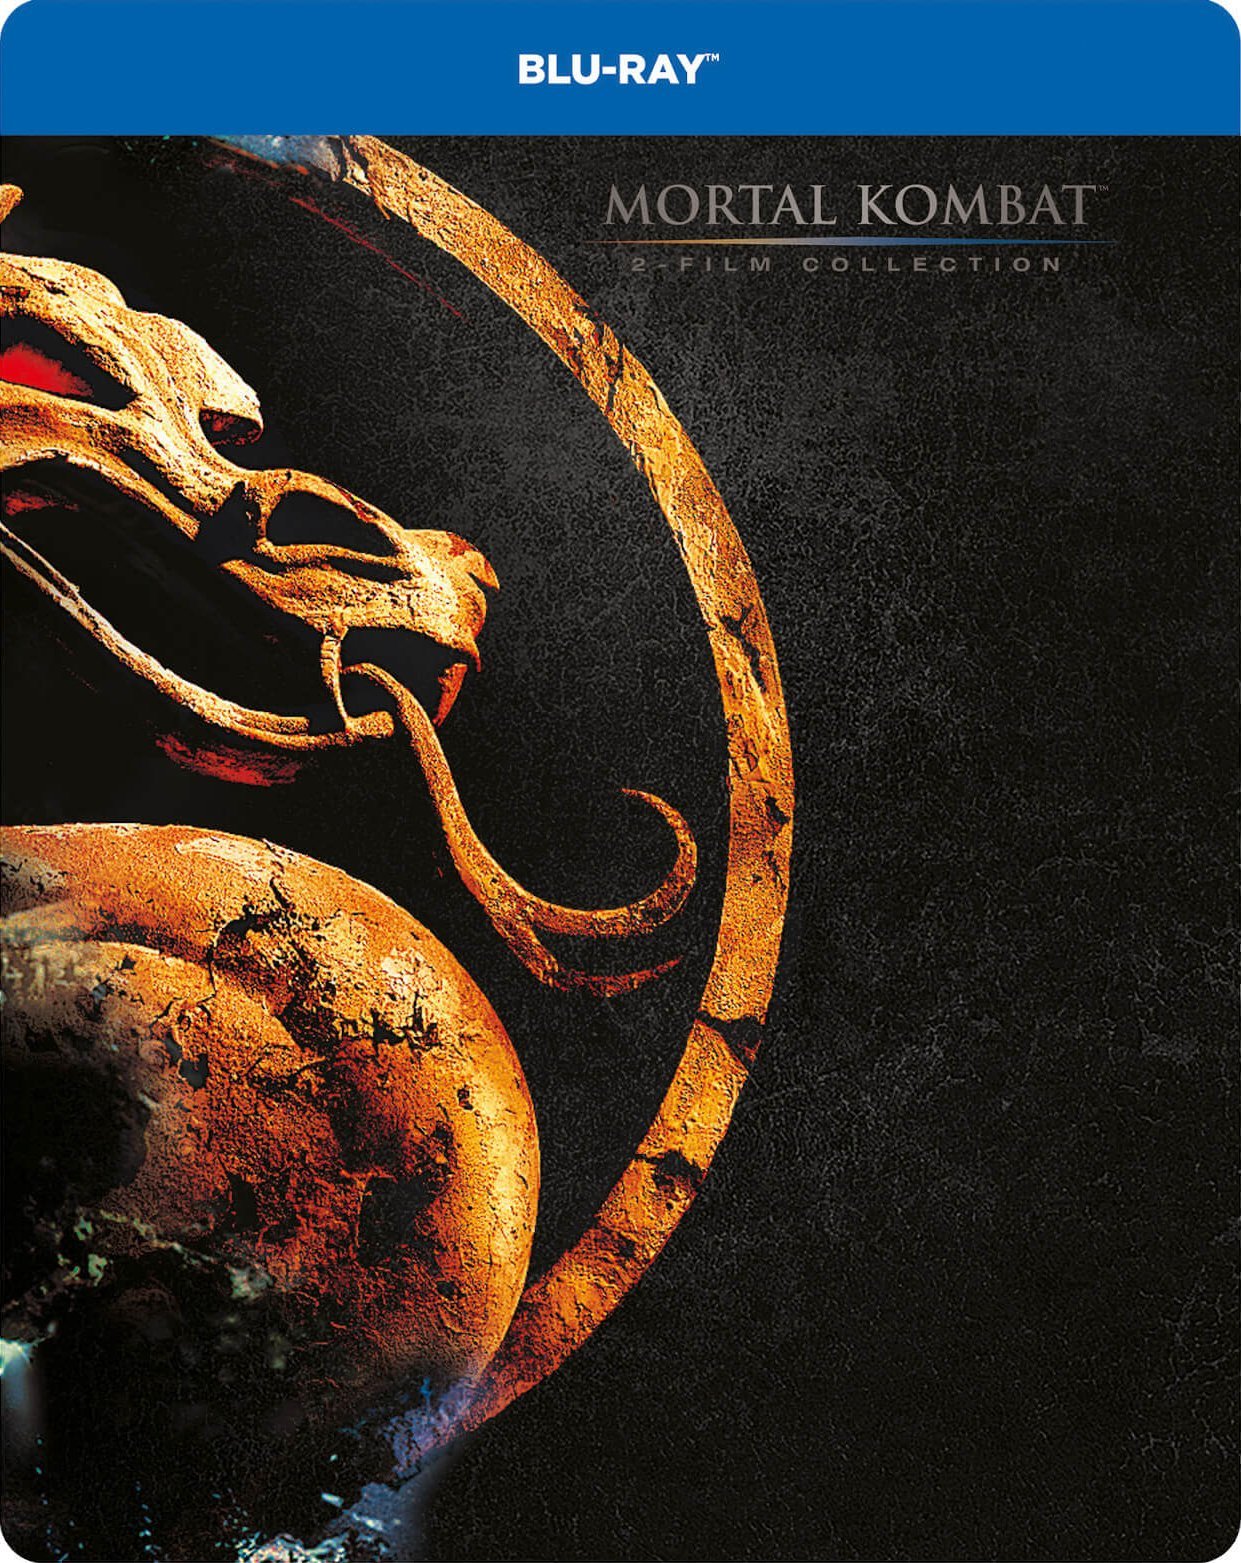 Mortal Kombat: 3-Film Collection (1995-2020) Combate Mortal: Colección de 3 Películas (1995-2020) [AC3 5.1/2.0 + SUP/SRT] [Blu Ray] [DVD] 285766_front